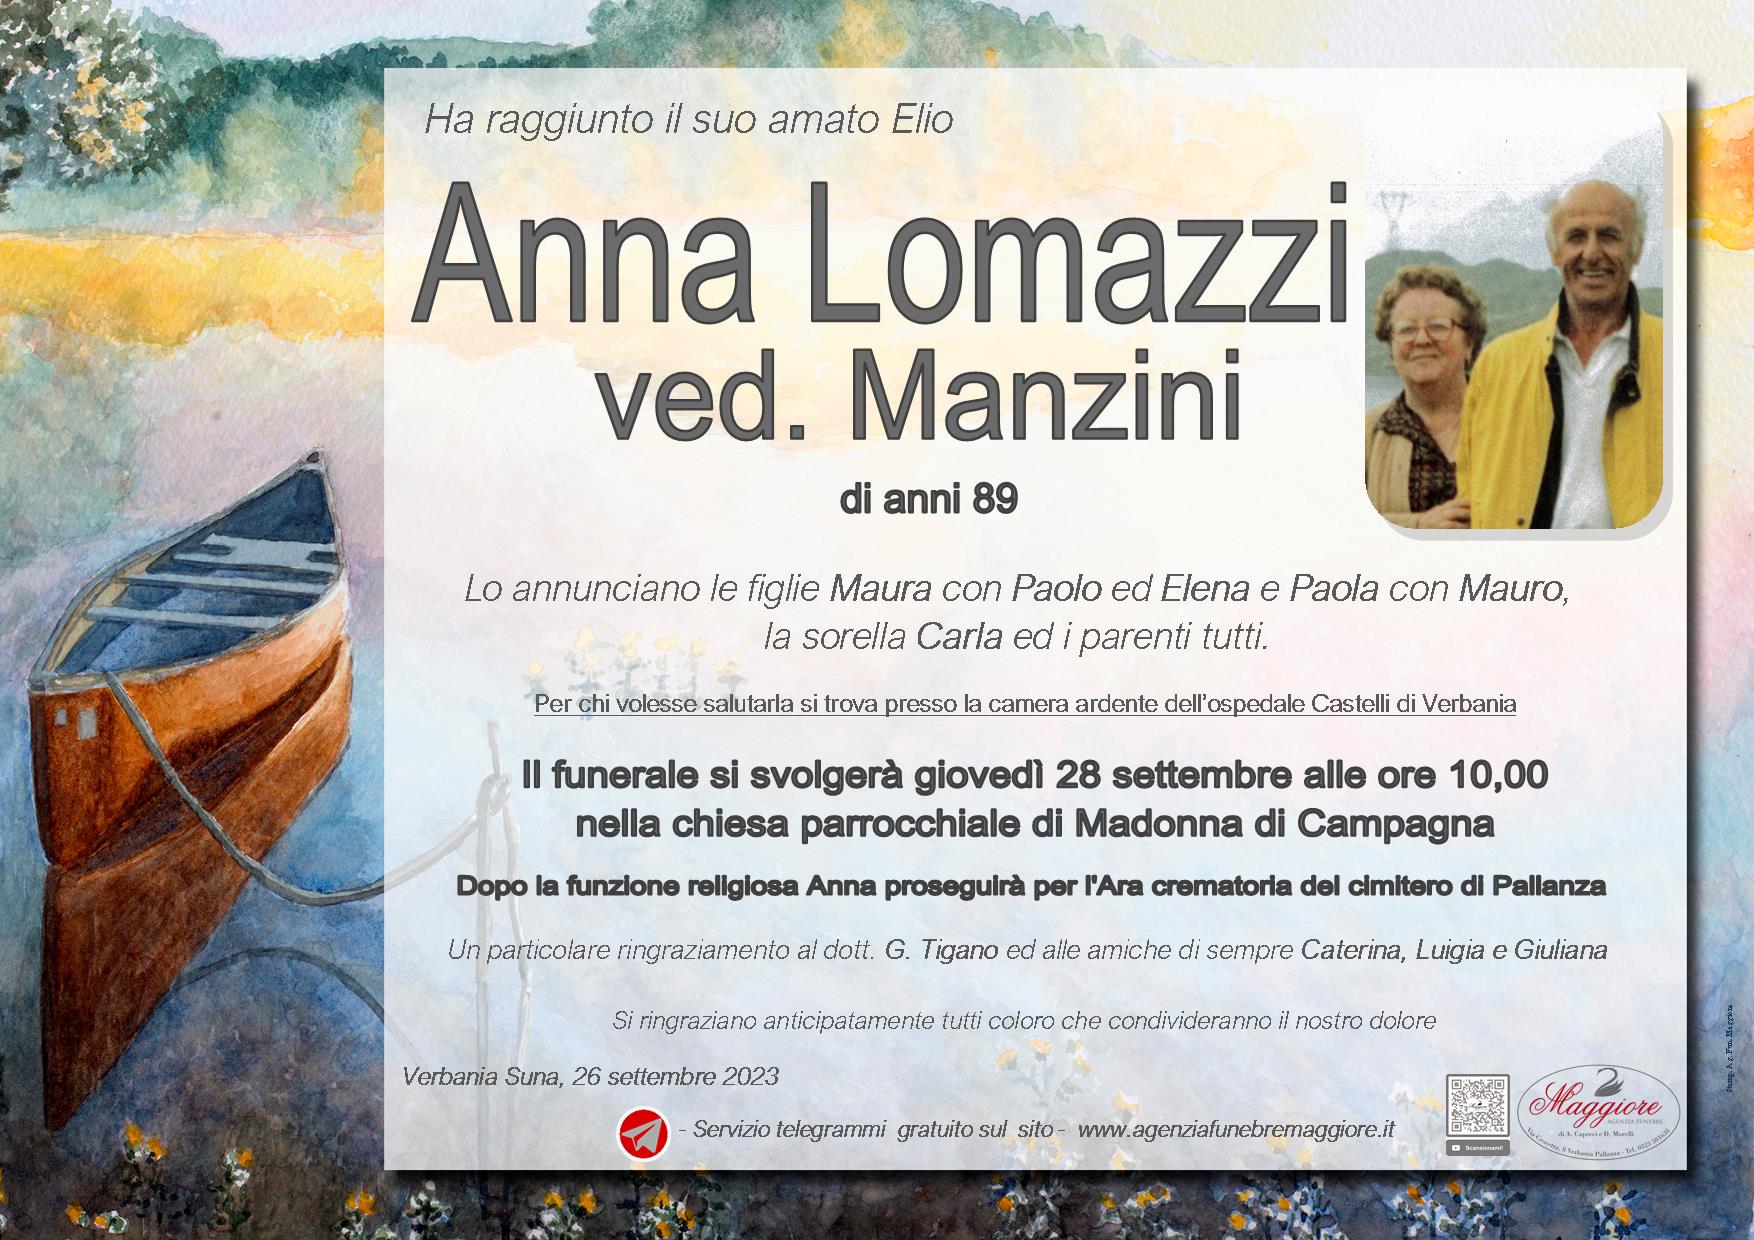 Anna Lomazzi ved. Manzini